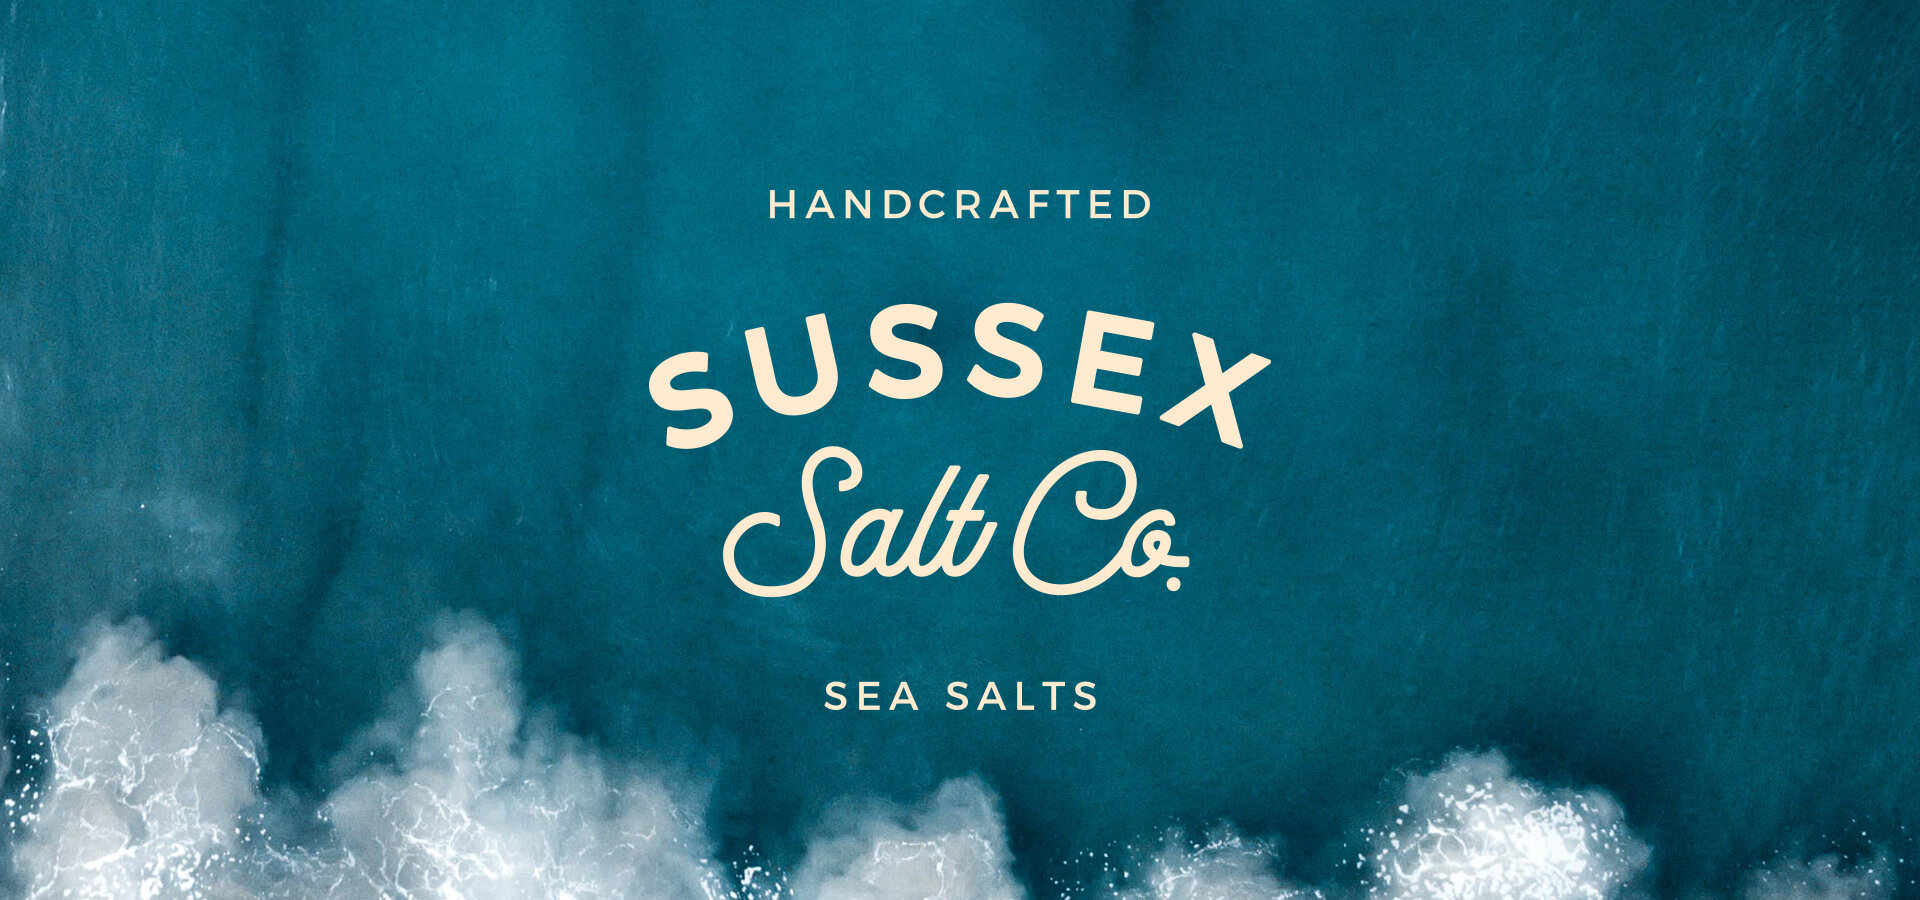 Sussex_Salt_Co_Alt_2.3.jpg